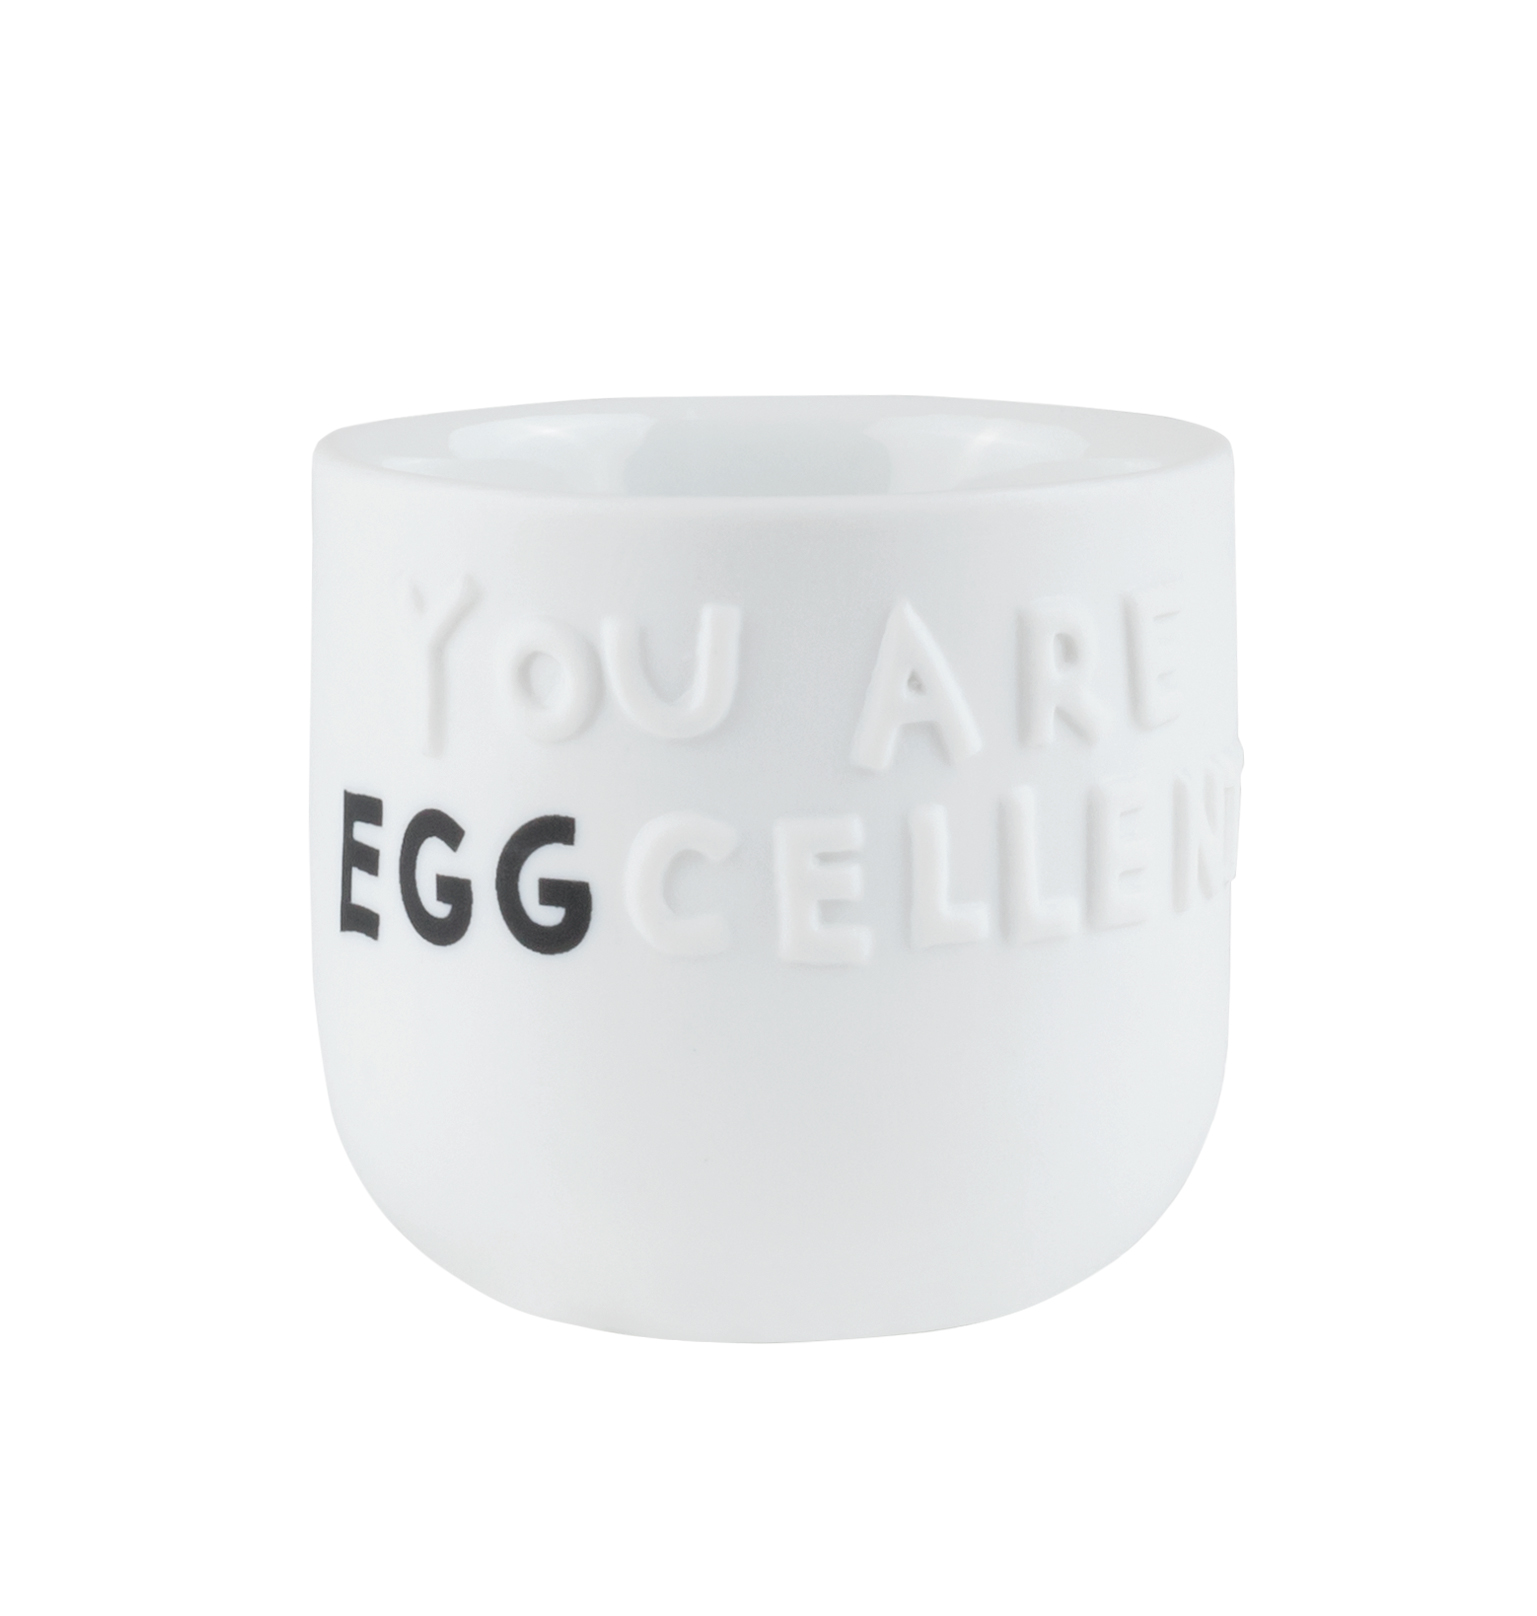 Eierbecher "You are eggcellent"